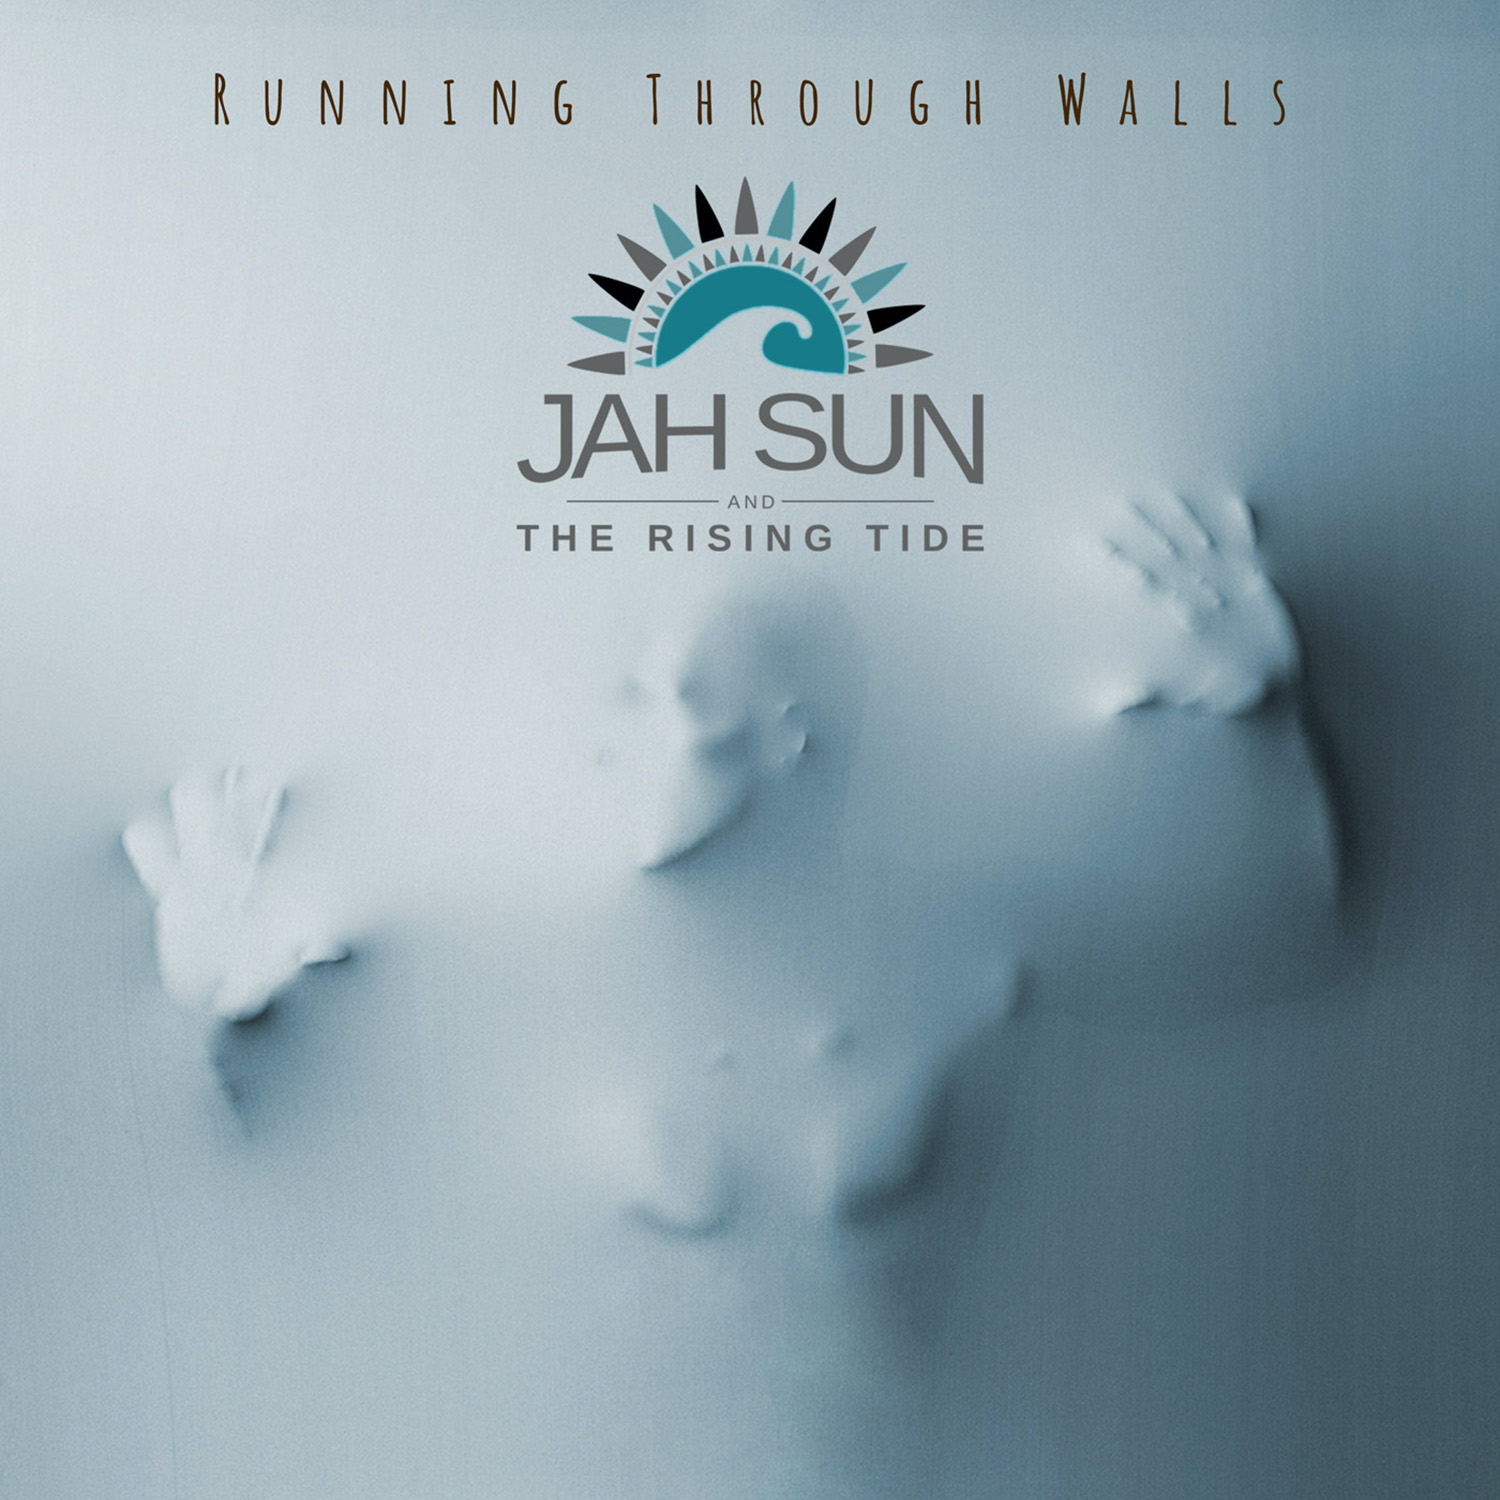 Jah Sun Running Through Walls